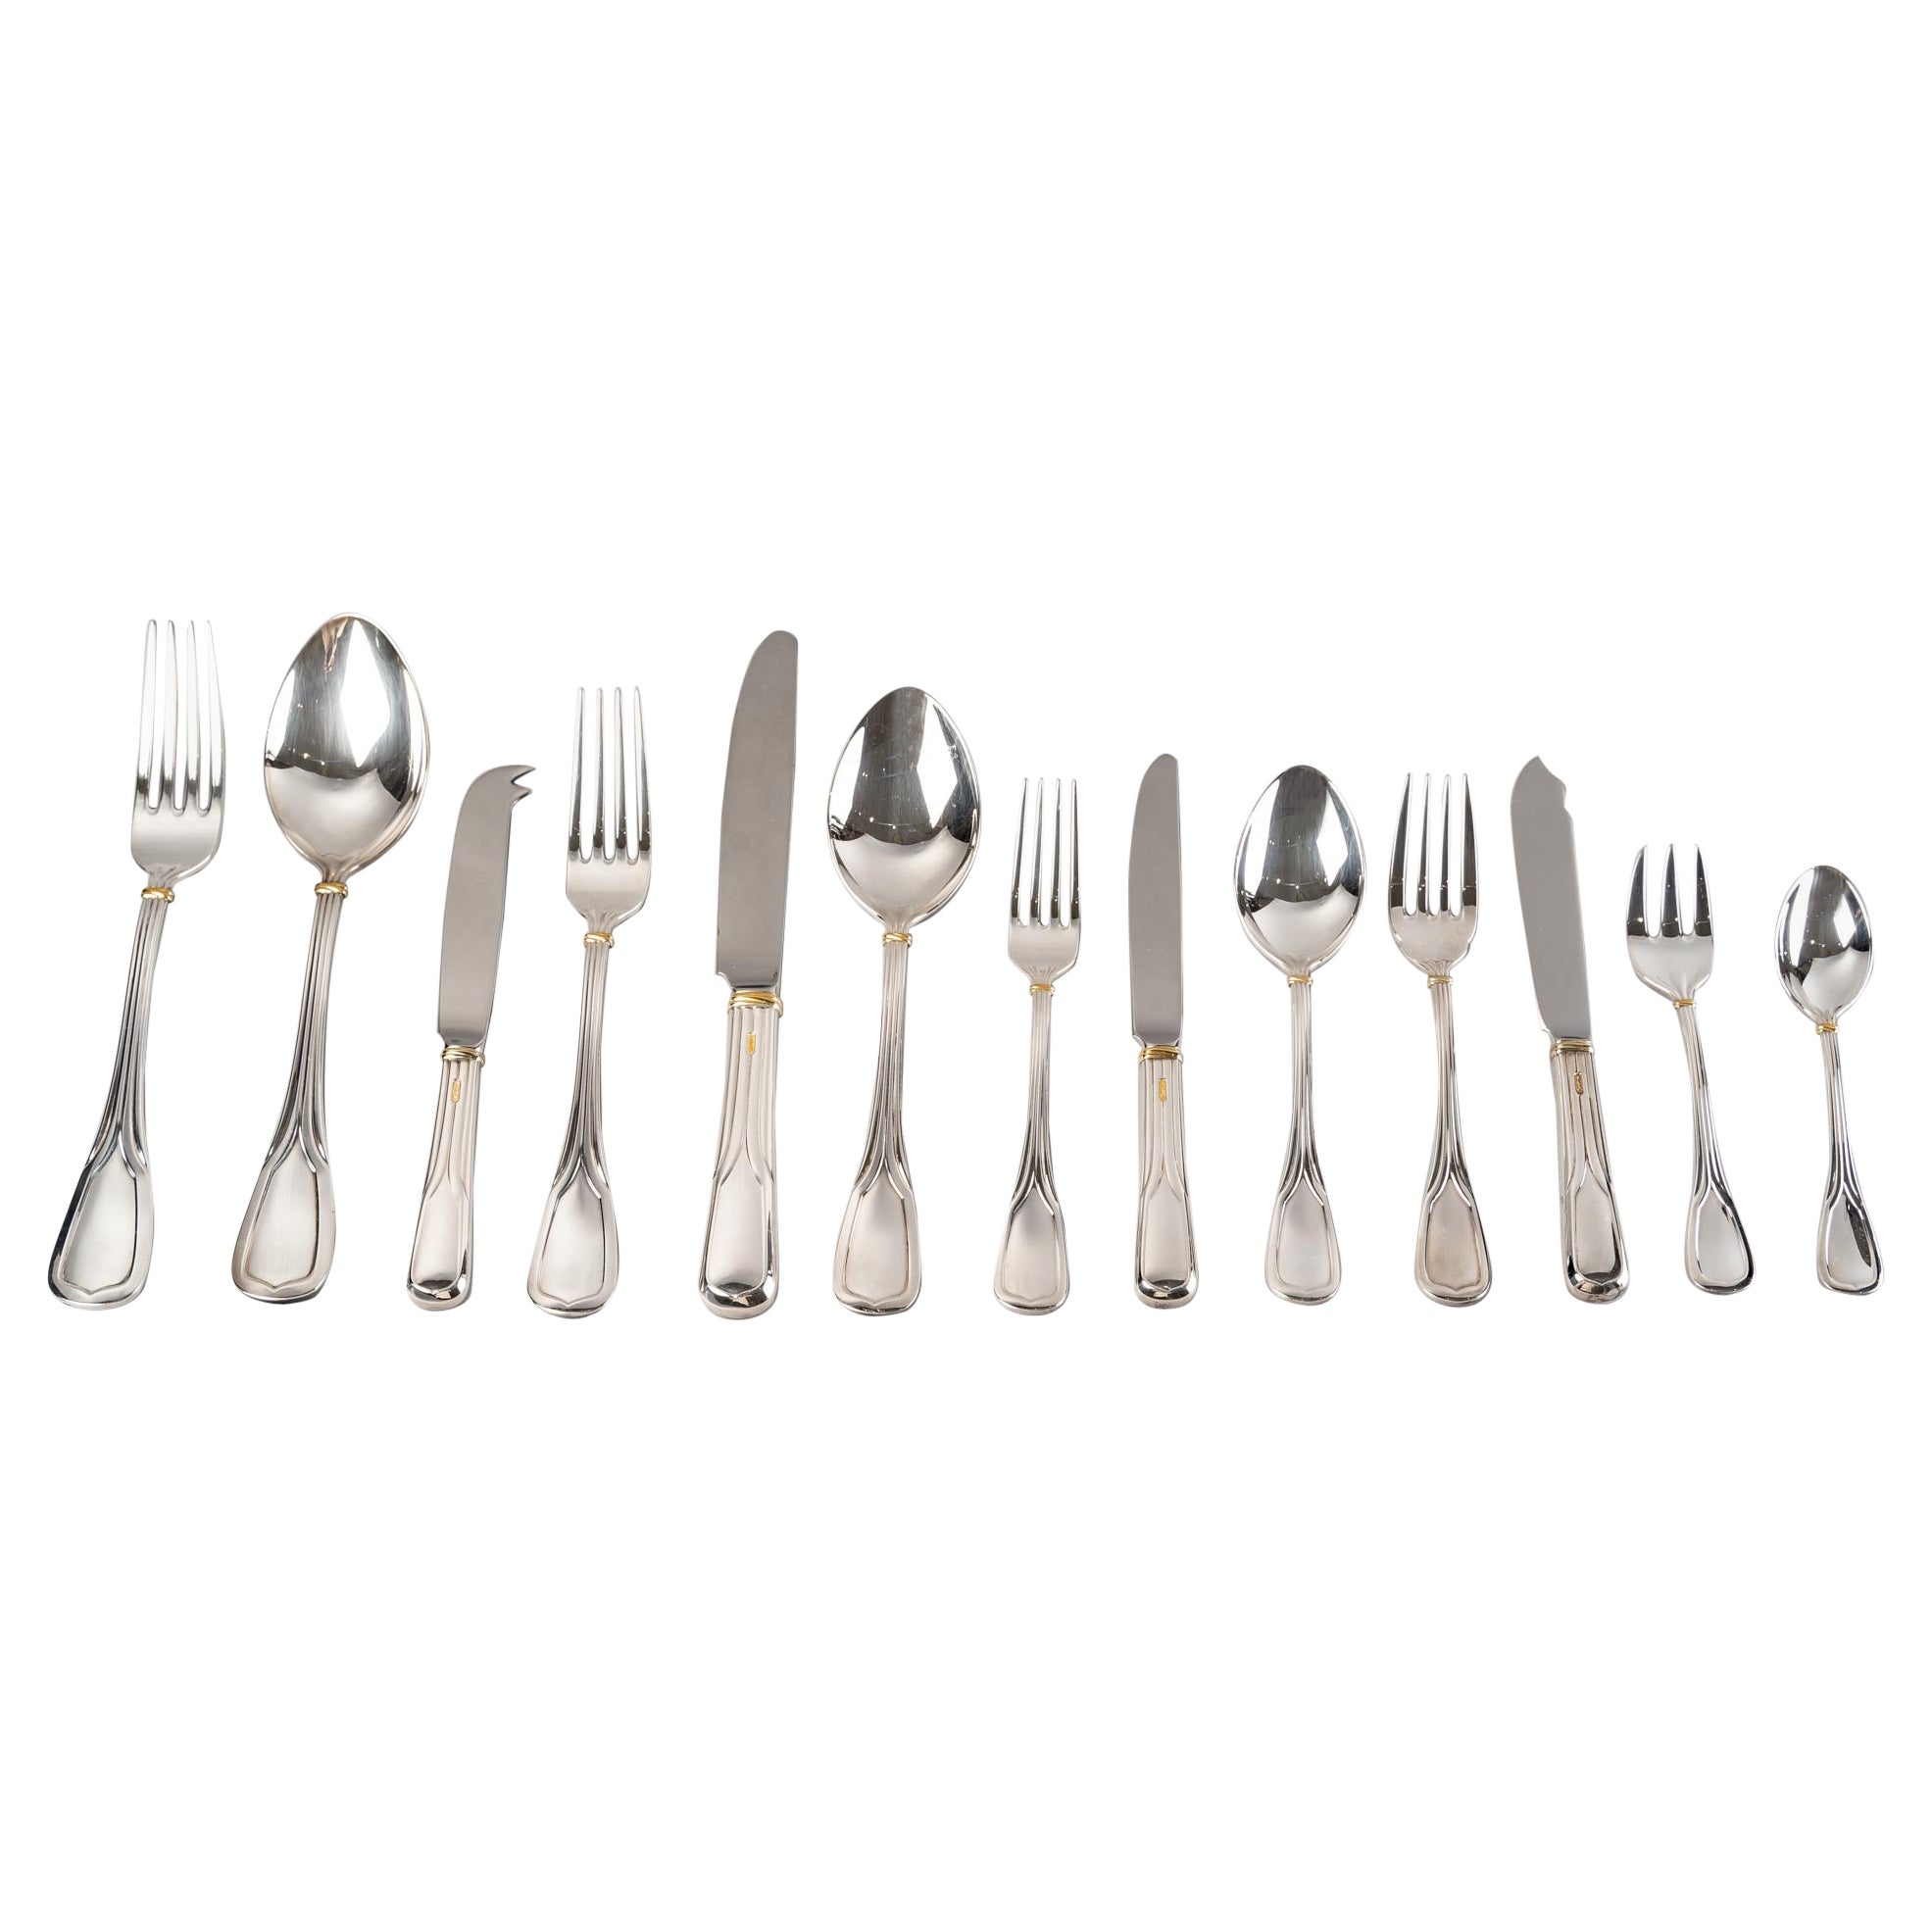 Cartier, Cutlery Flatware Set Maison Du Prince Trinity Silver Metal 110 Pieces